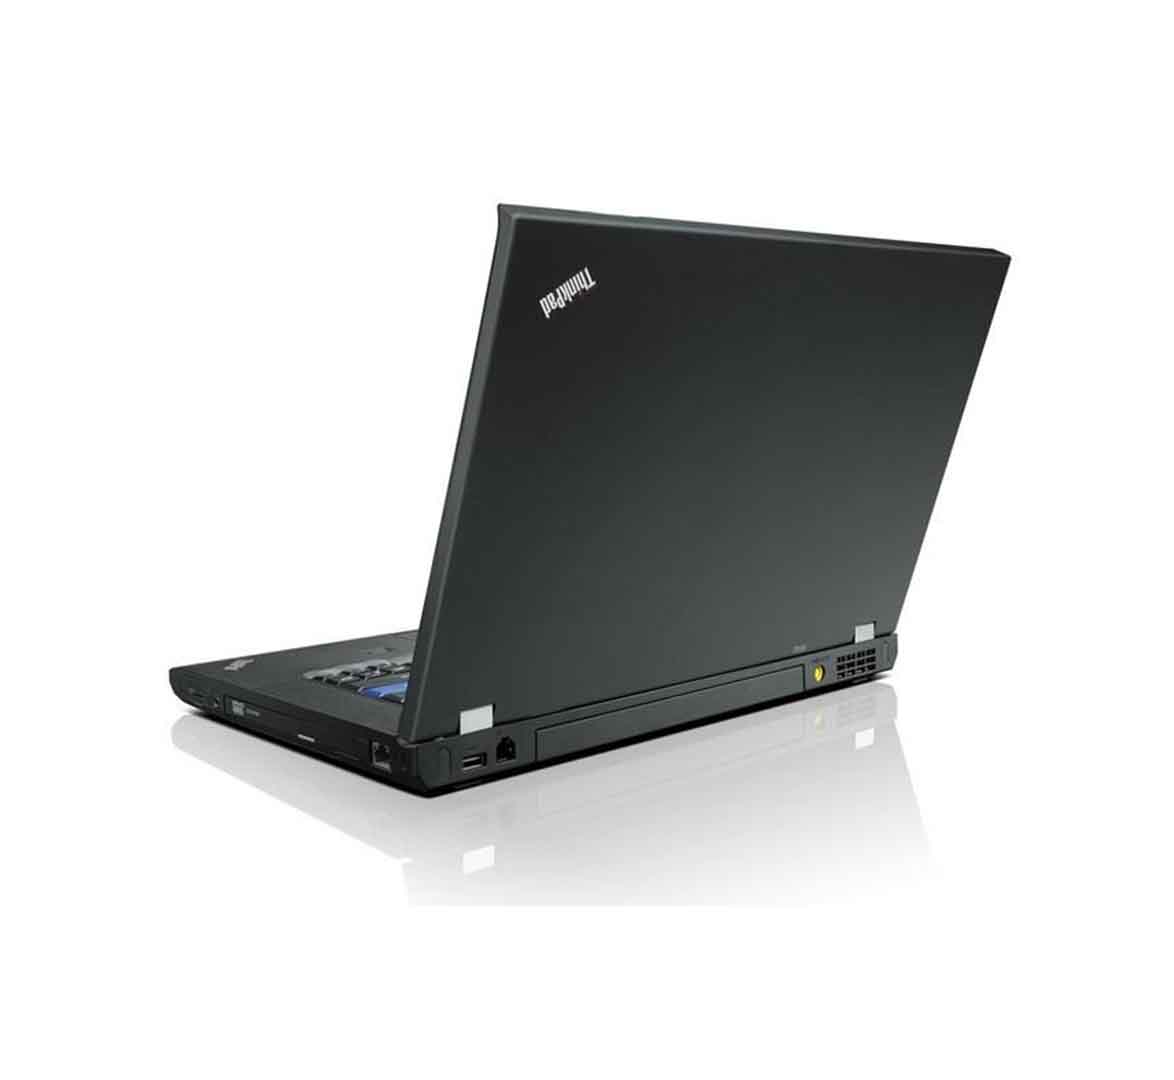 Lenovo ThinkPad T520 Business Laptop, Intel Core i5-2nd Generation CPU, 8GB RAM, 256GB SSD, 15 inch Display, Windows 10 Pro